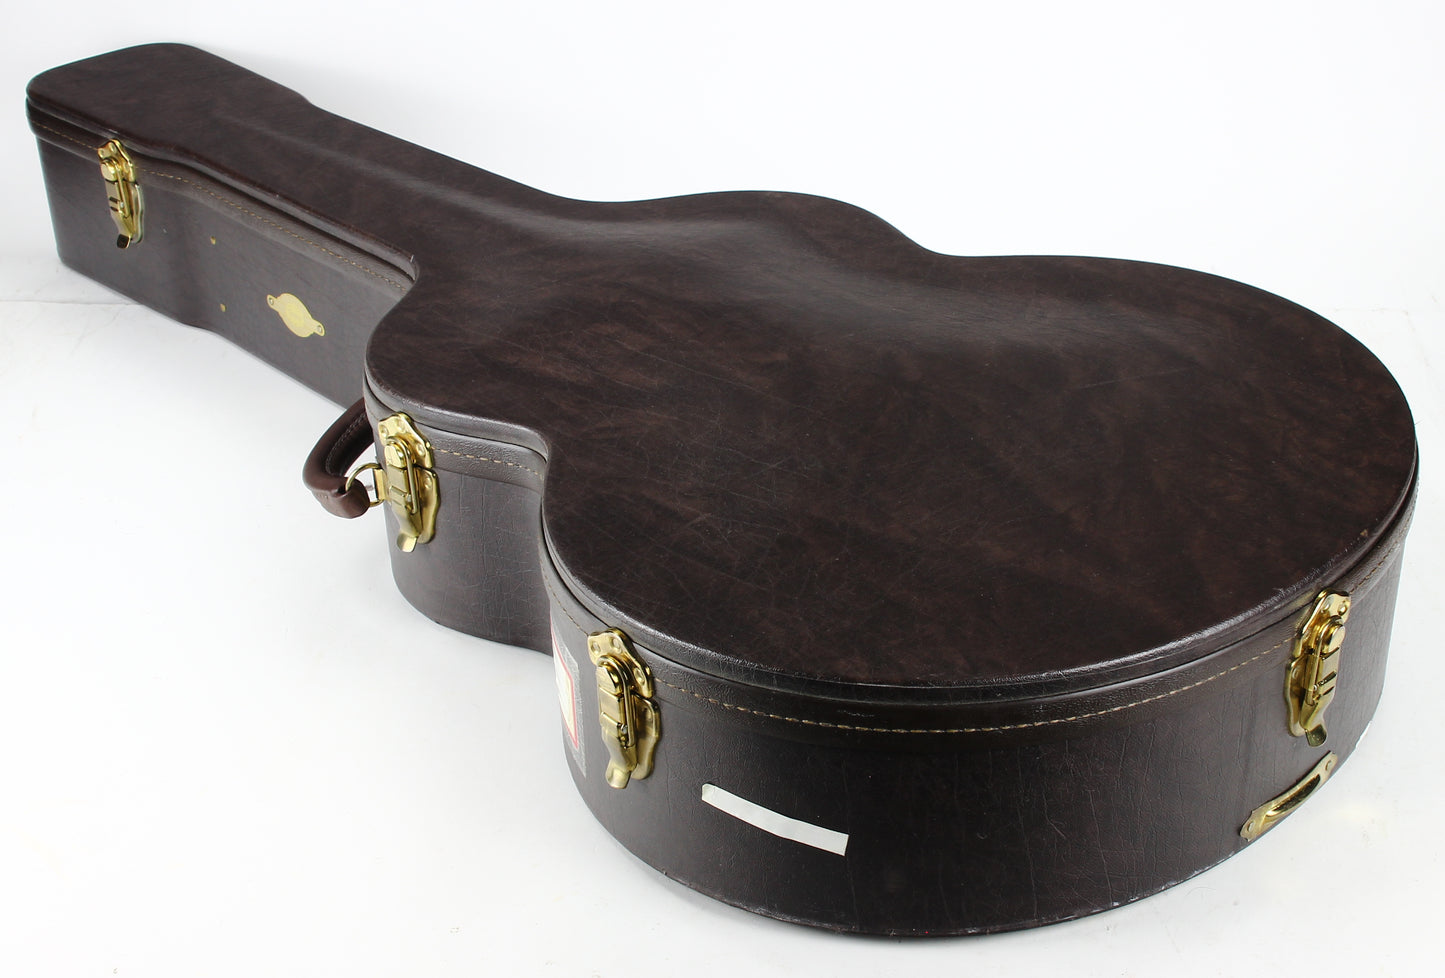 UNPLAYED! 1994 Taylor 815C Jumbo Acoustic Guitar - Florentine Cutaway, 800 series 810 812 814ce 815ce